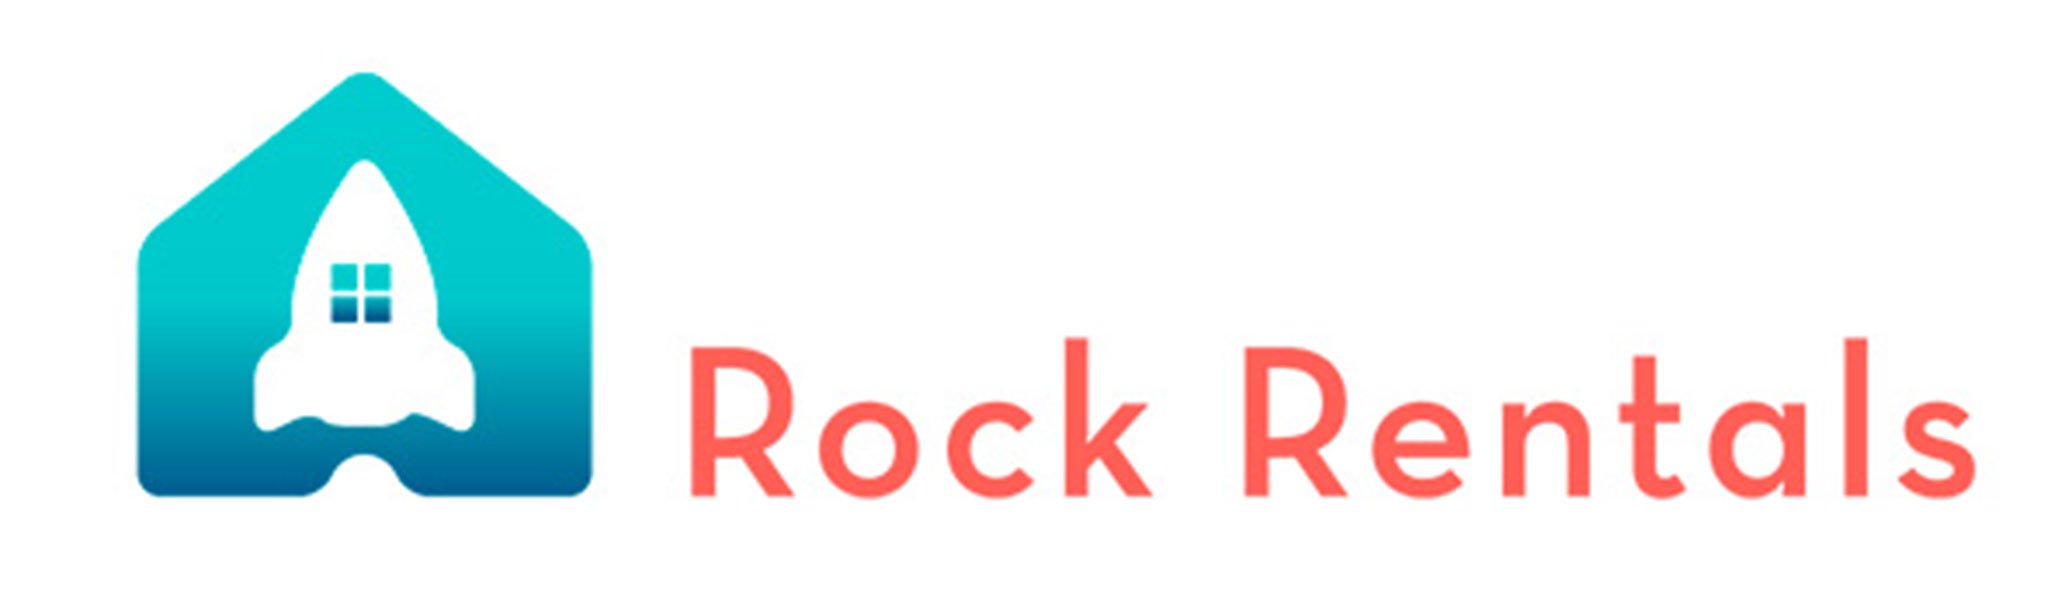 Logotipo de Rock Rentals